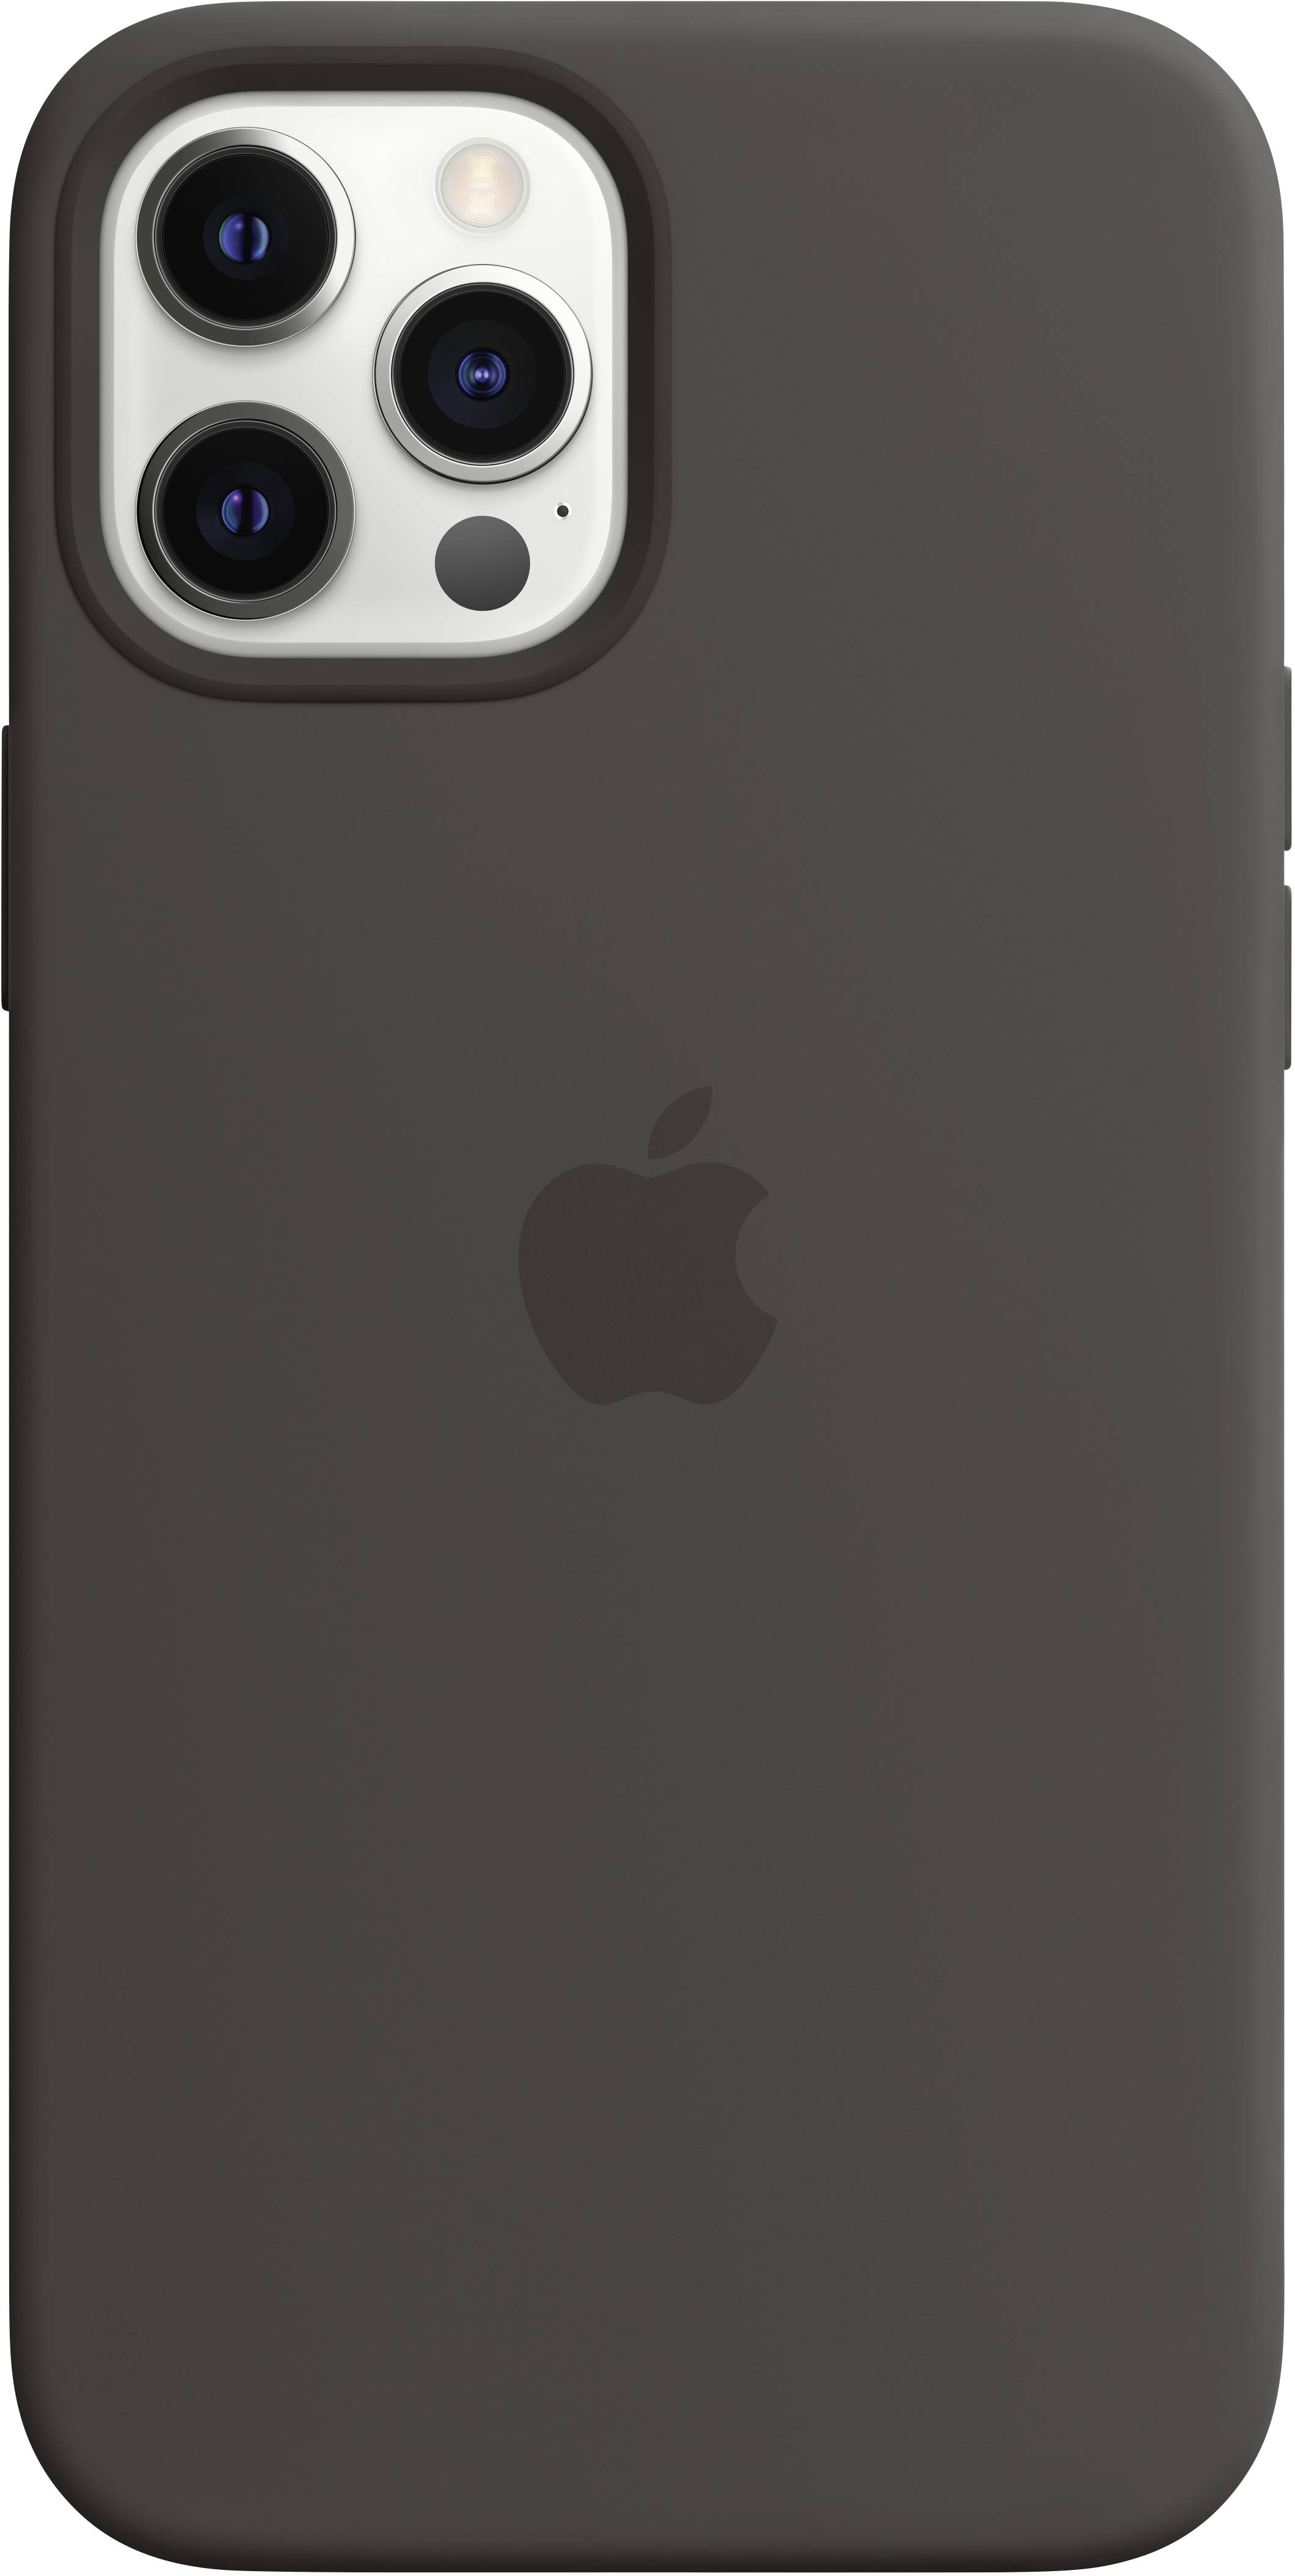 Iphone 12 max apple pro Apple iPhone